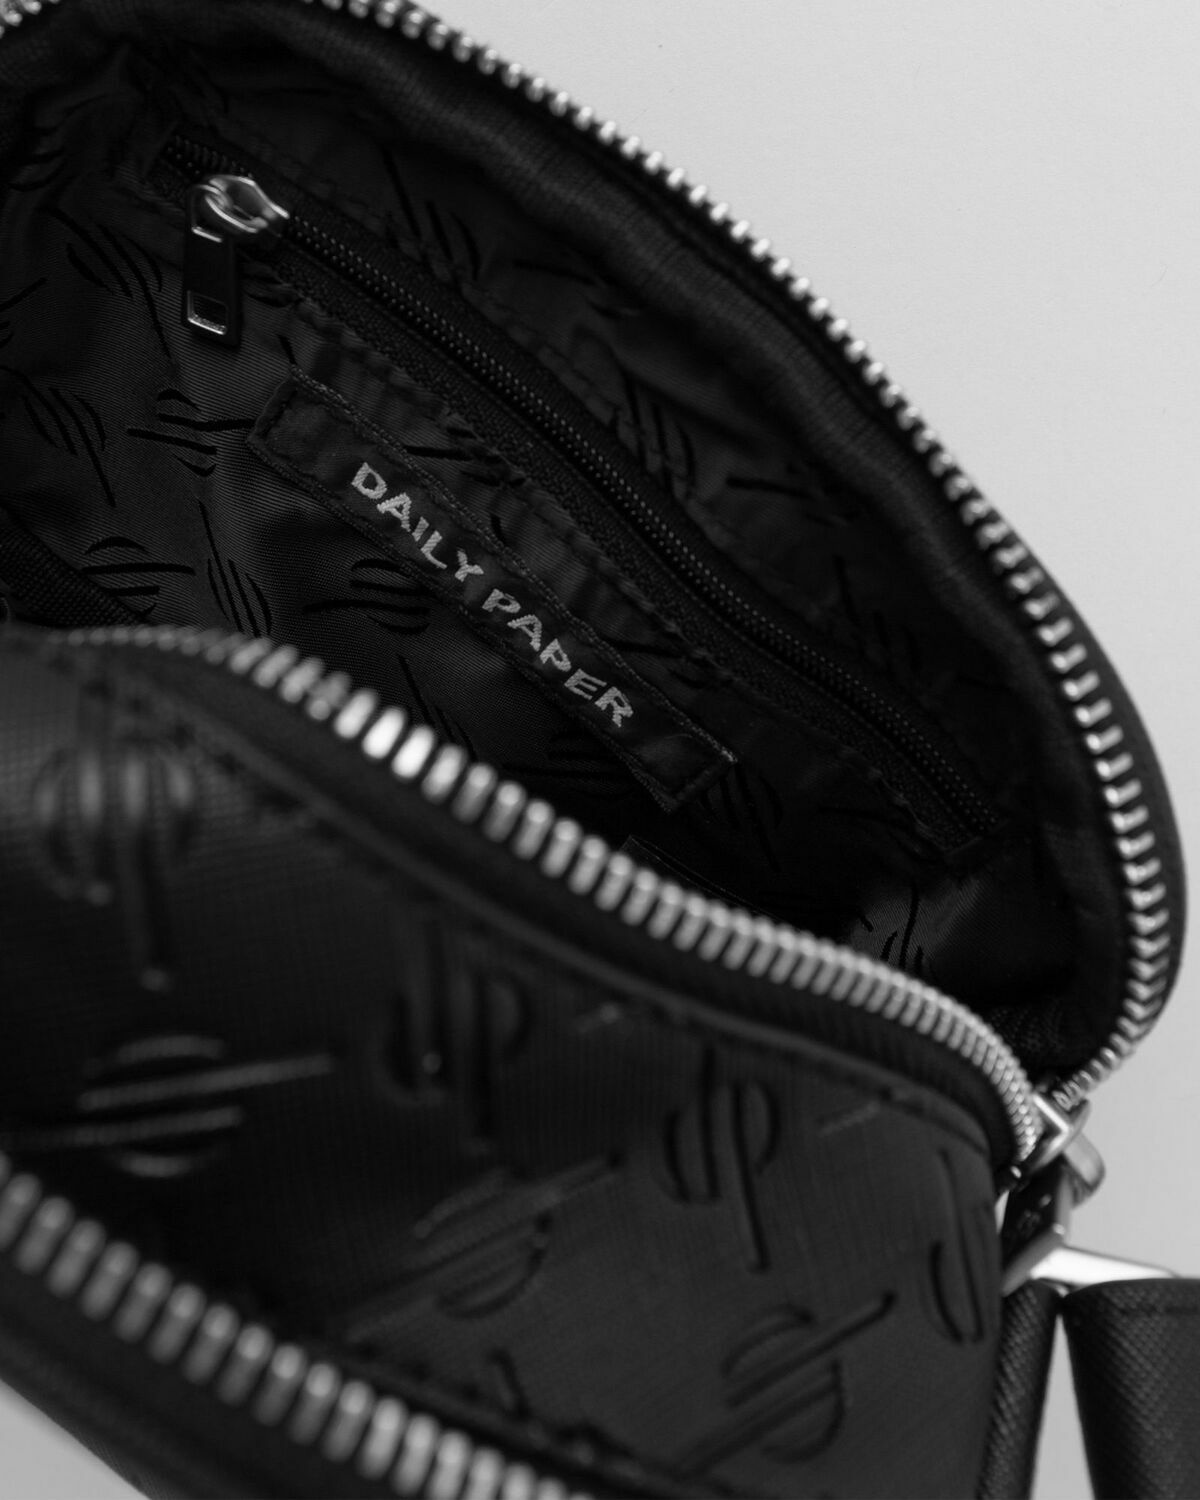 DAILY PAPER Crossbody bag MERU MONOGRAM in black